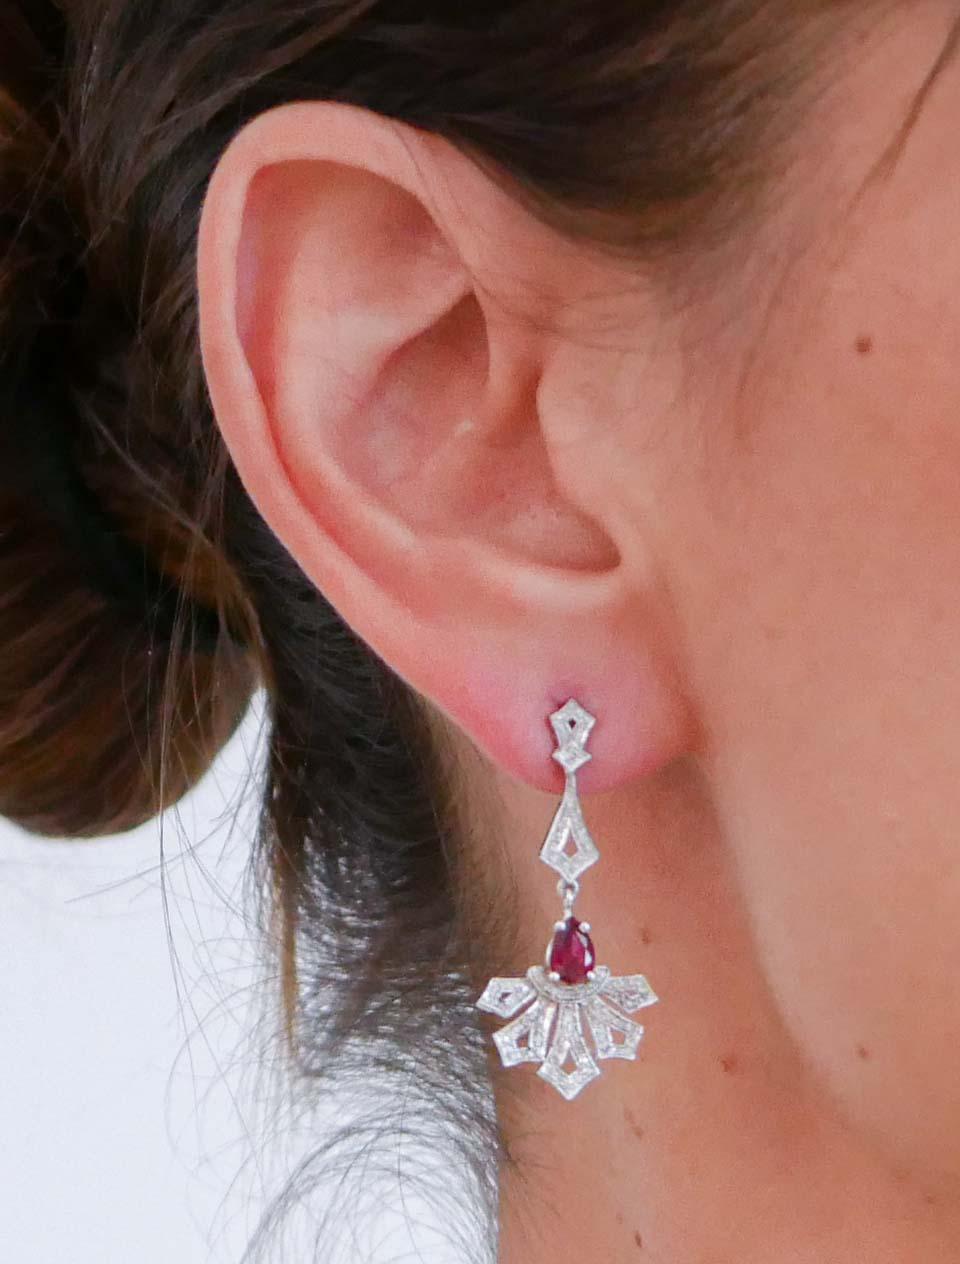 Rubies, Diamonds, 14 Karat White Gold Dangle Earrings. In Good Condition For Sale In Marcianise, Marcianise (CE)